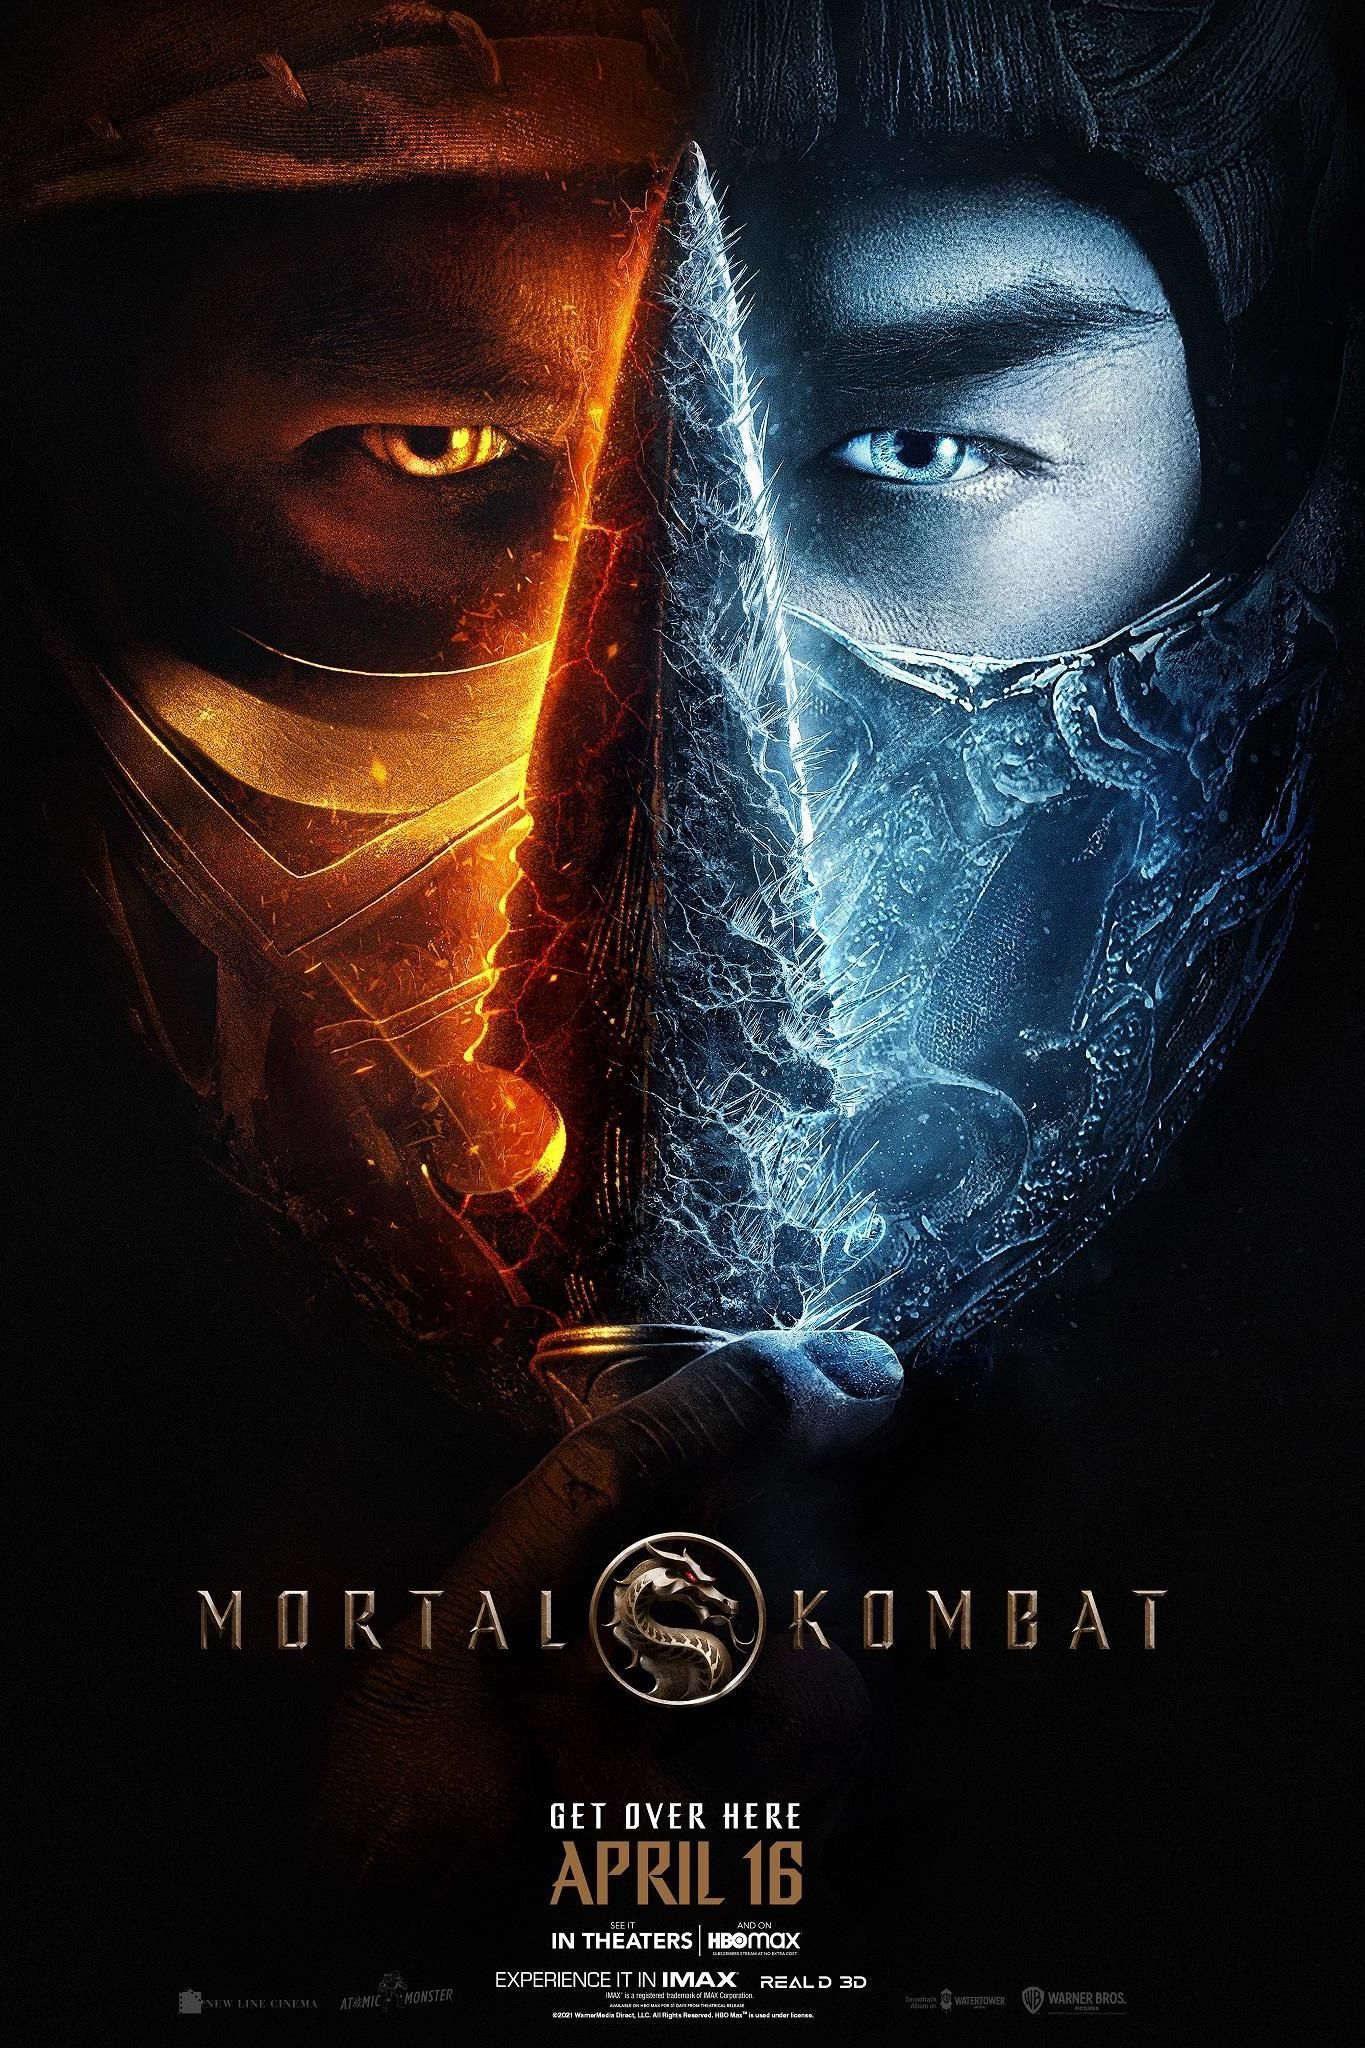 Mortal Kombat 2 (2023) – First Look – Teaser Trailer – Keanu